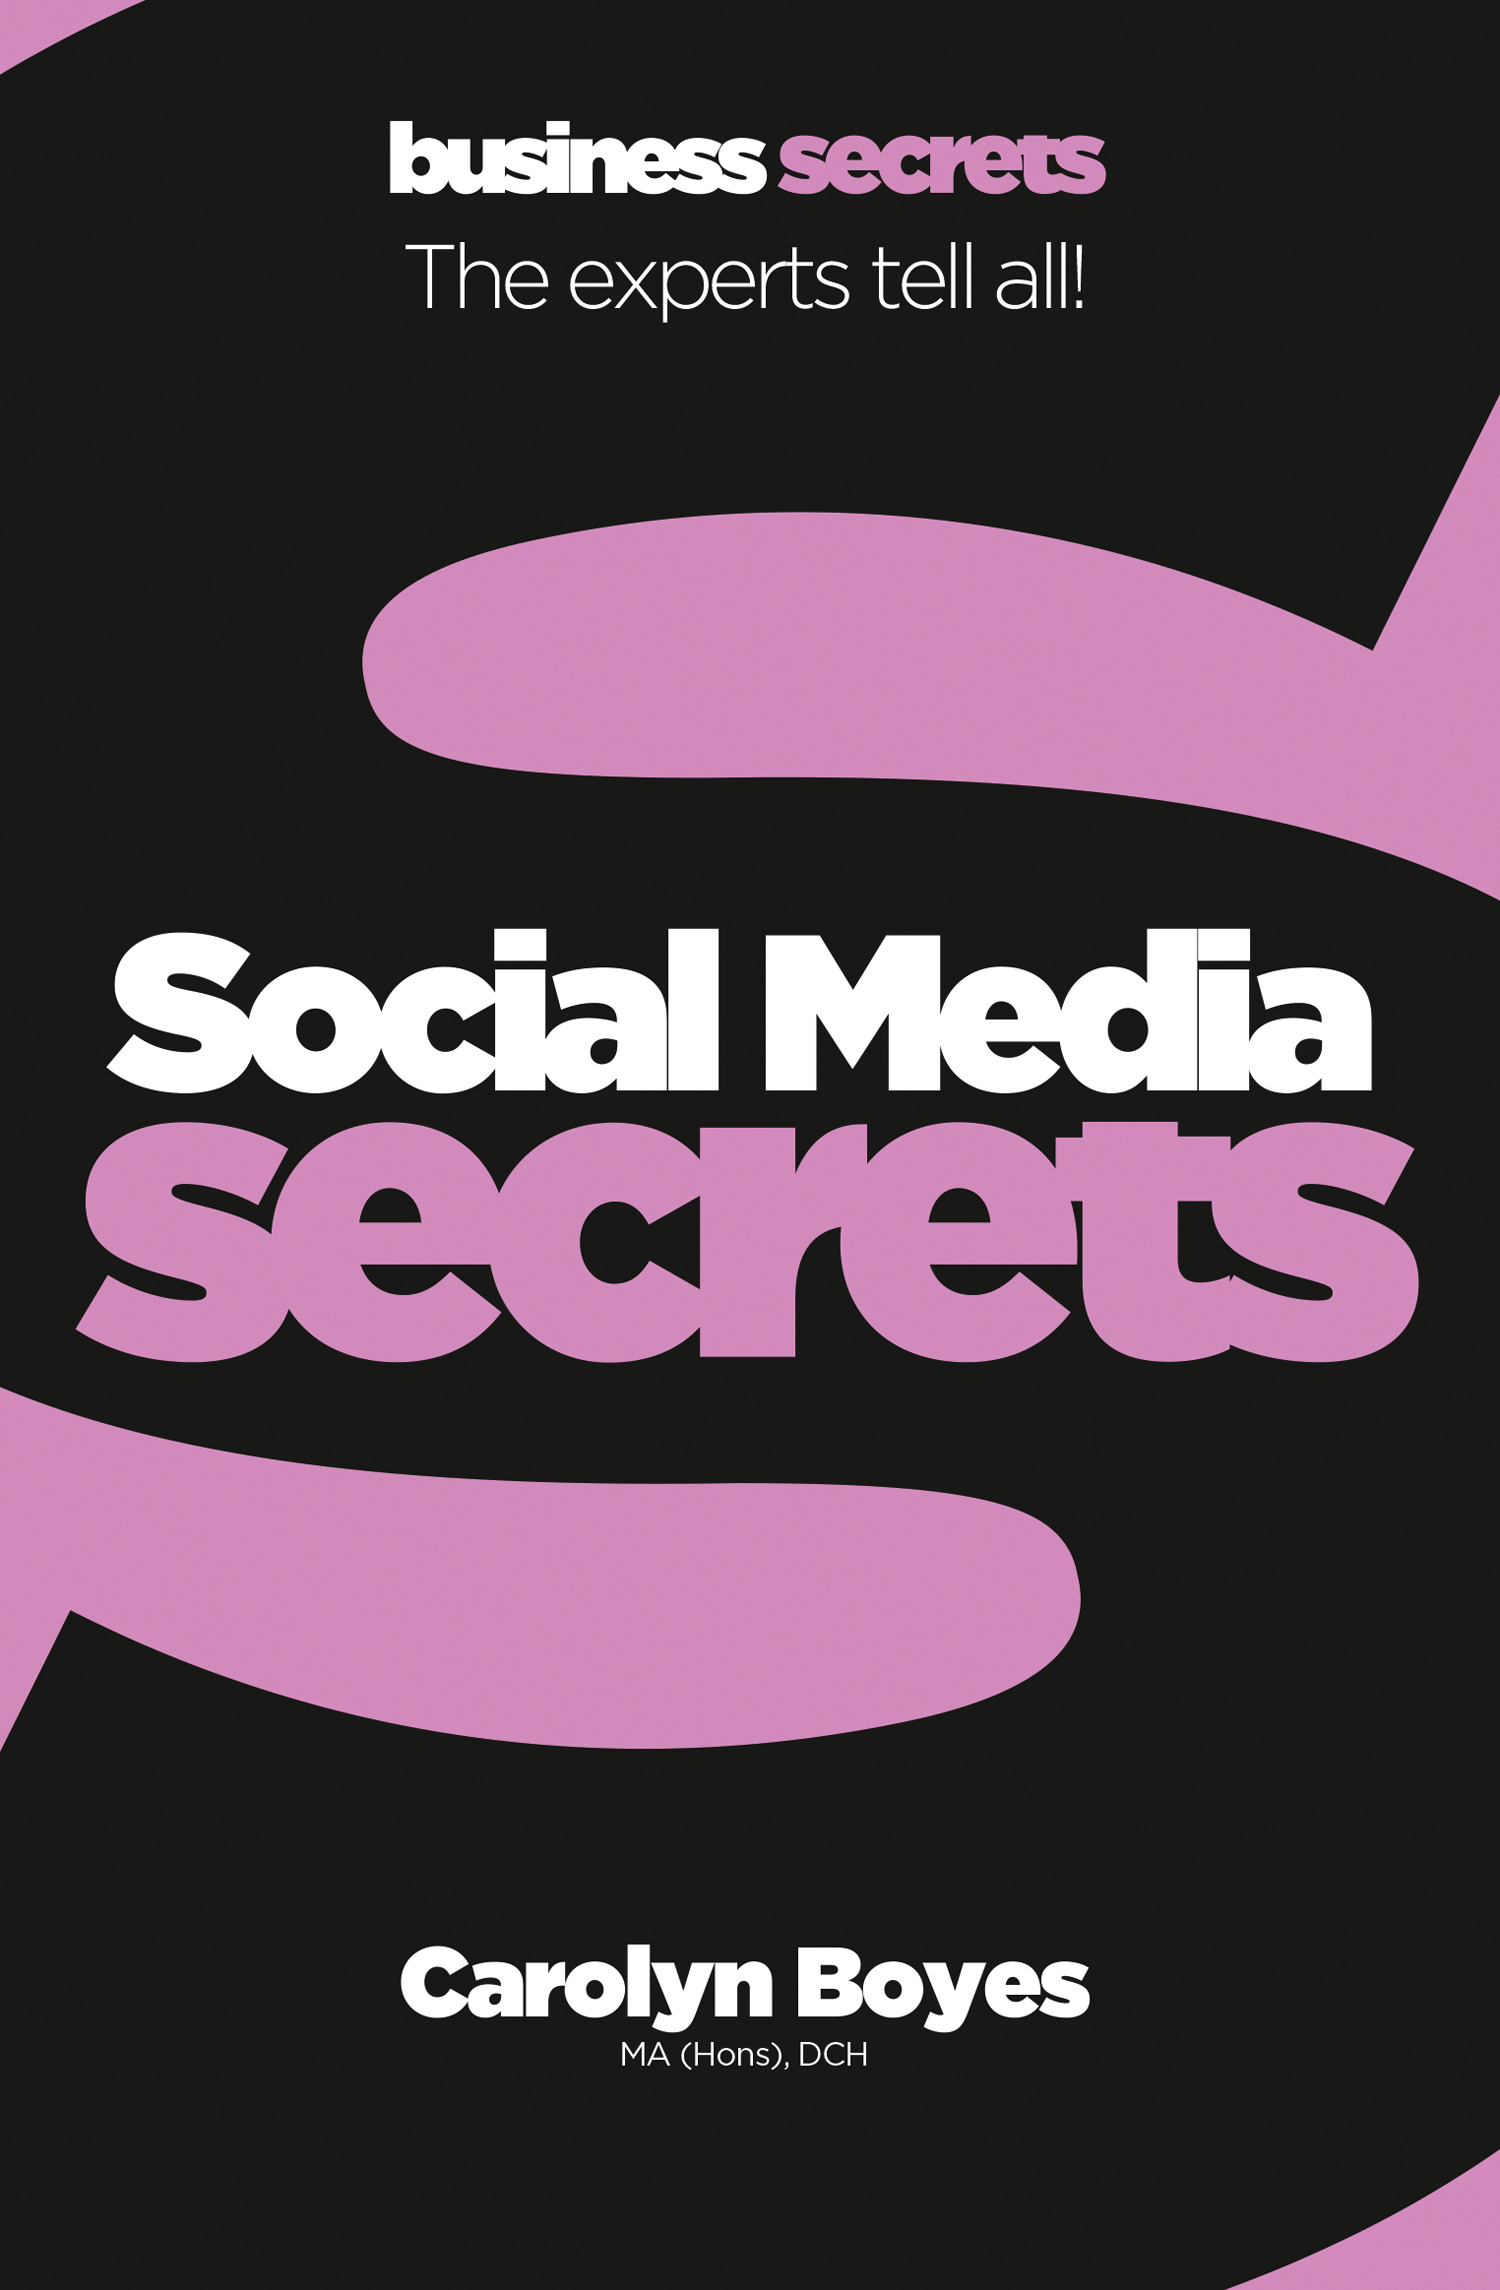 Secret media